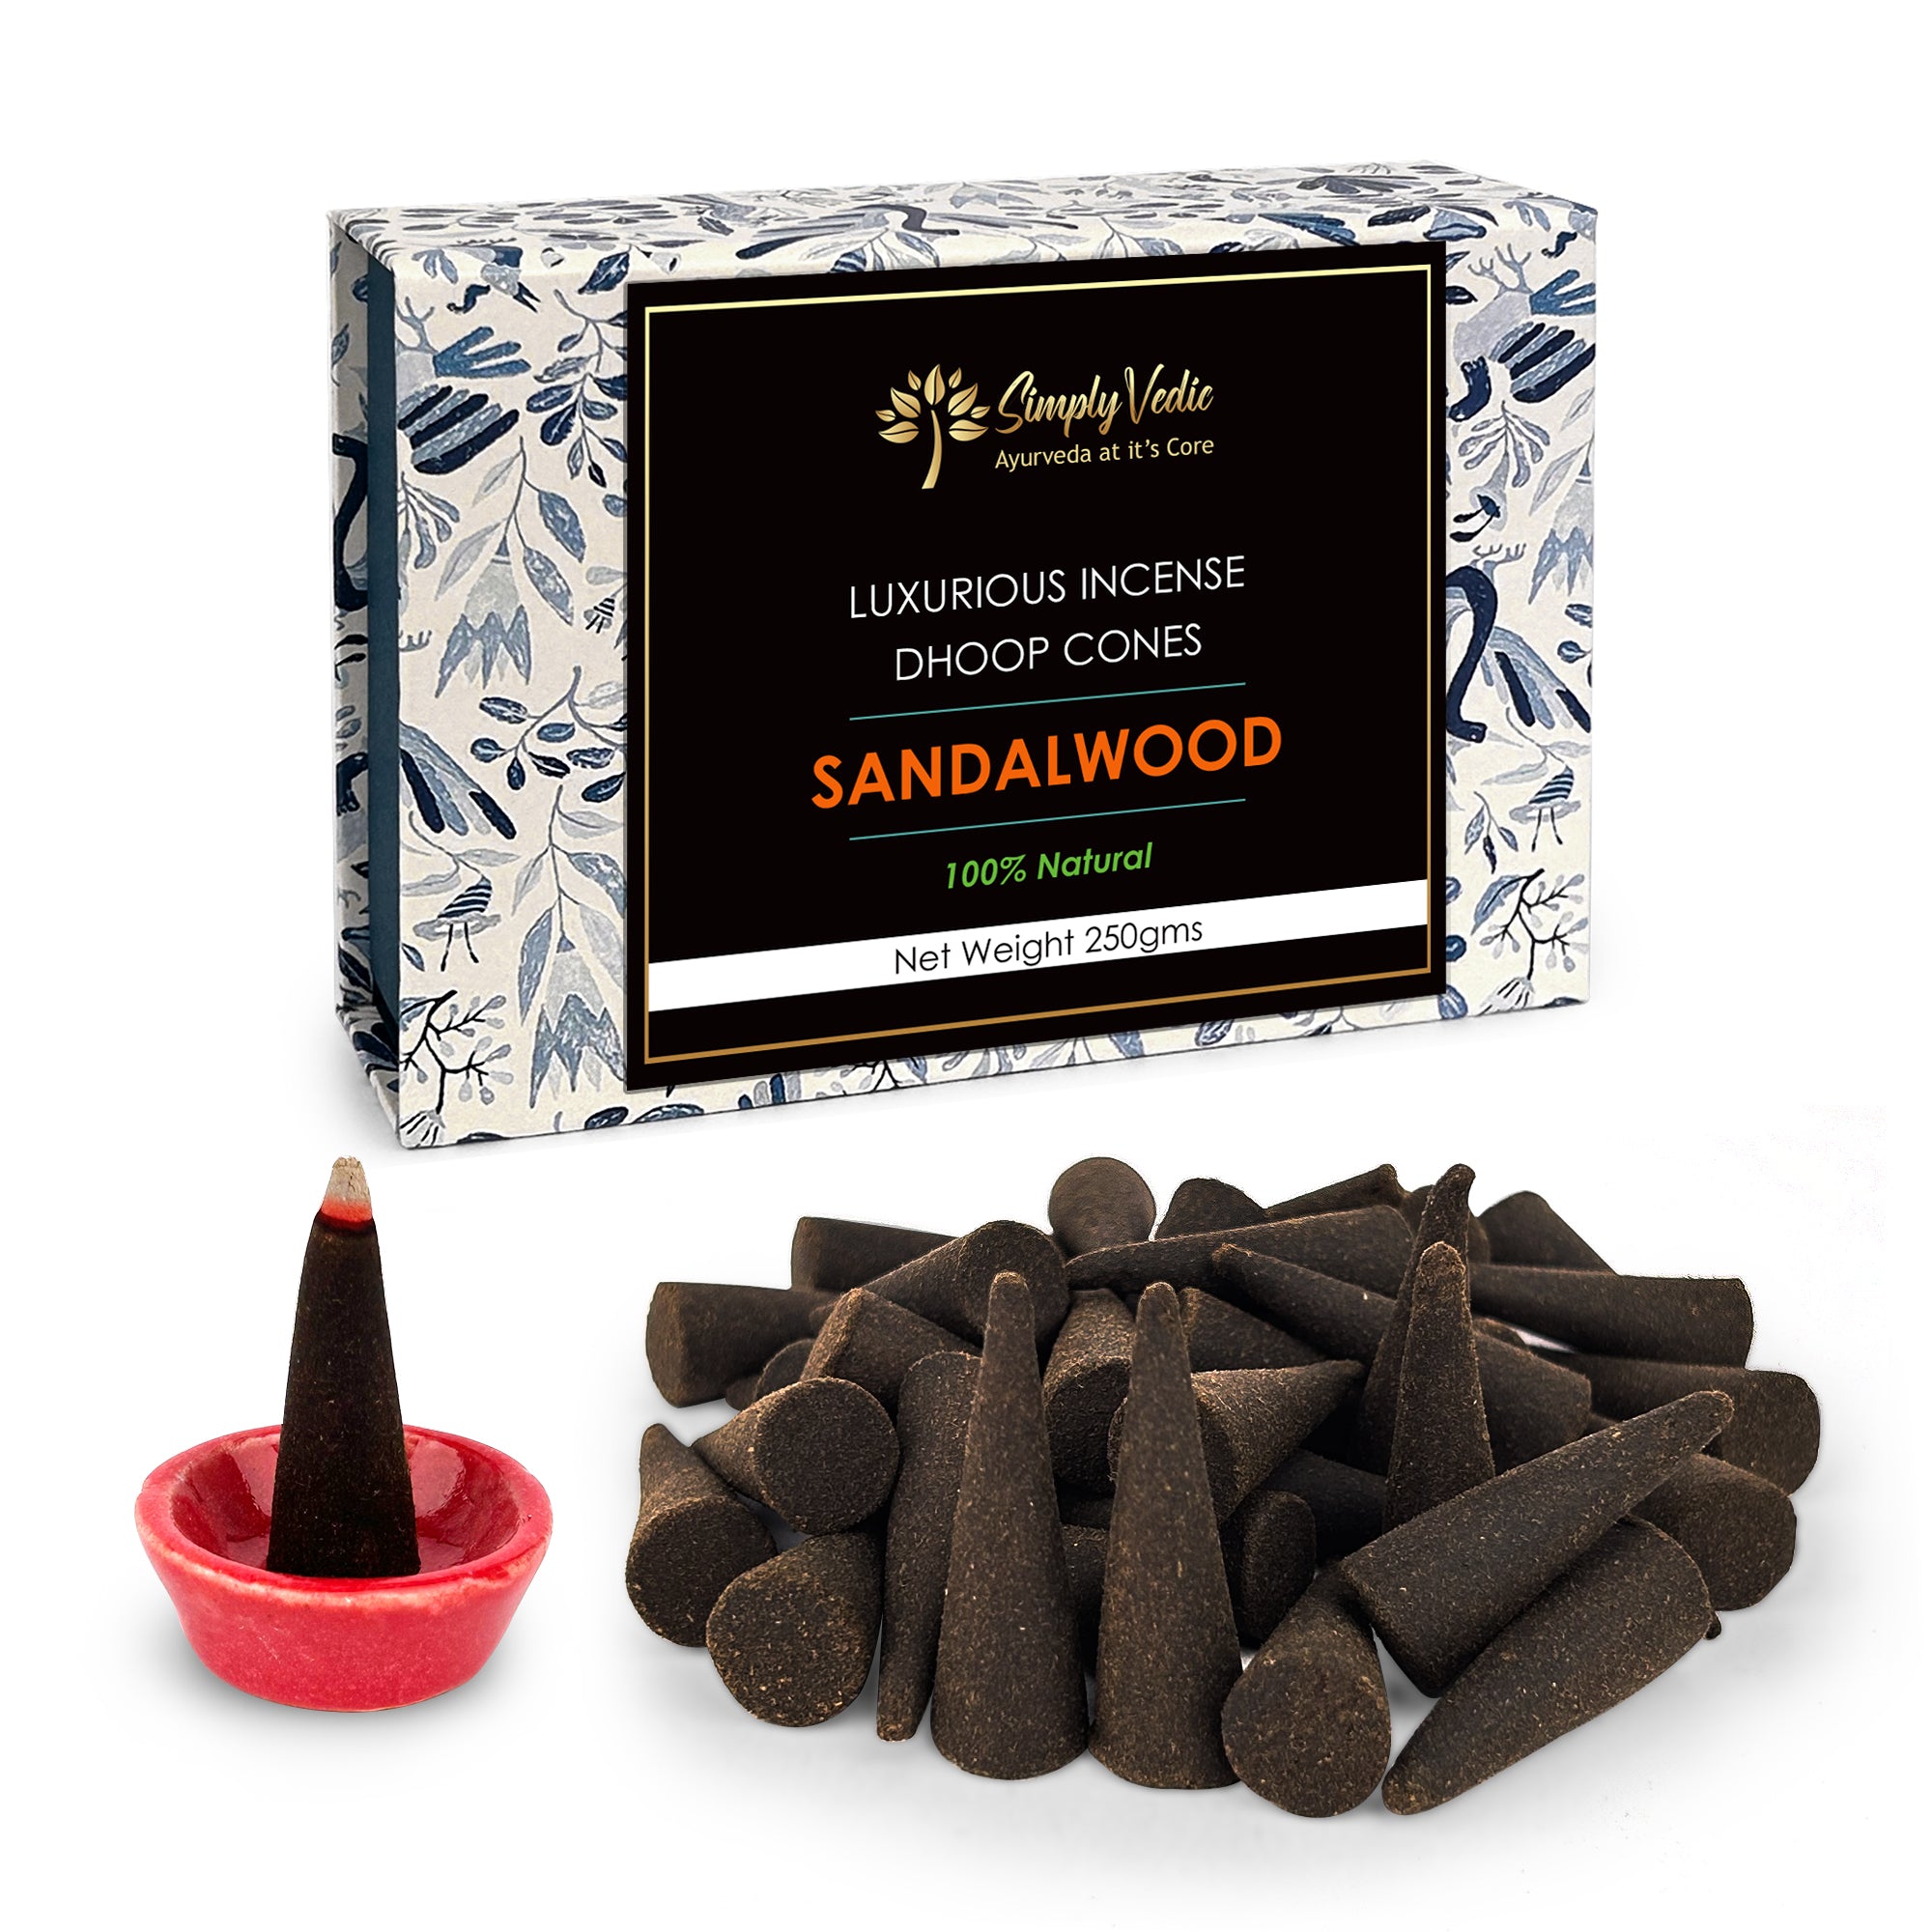 Simply Vedic's Sandalwood Incense Cones